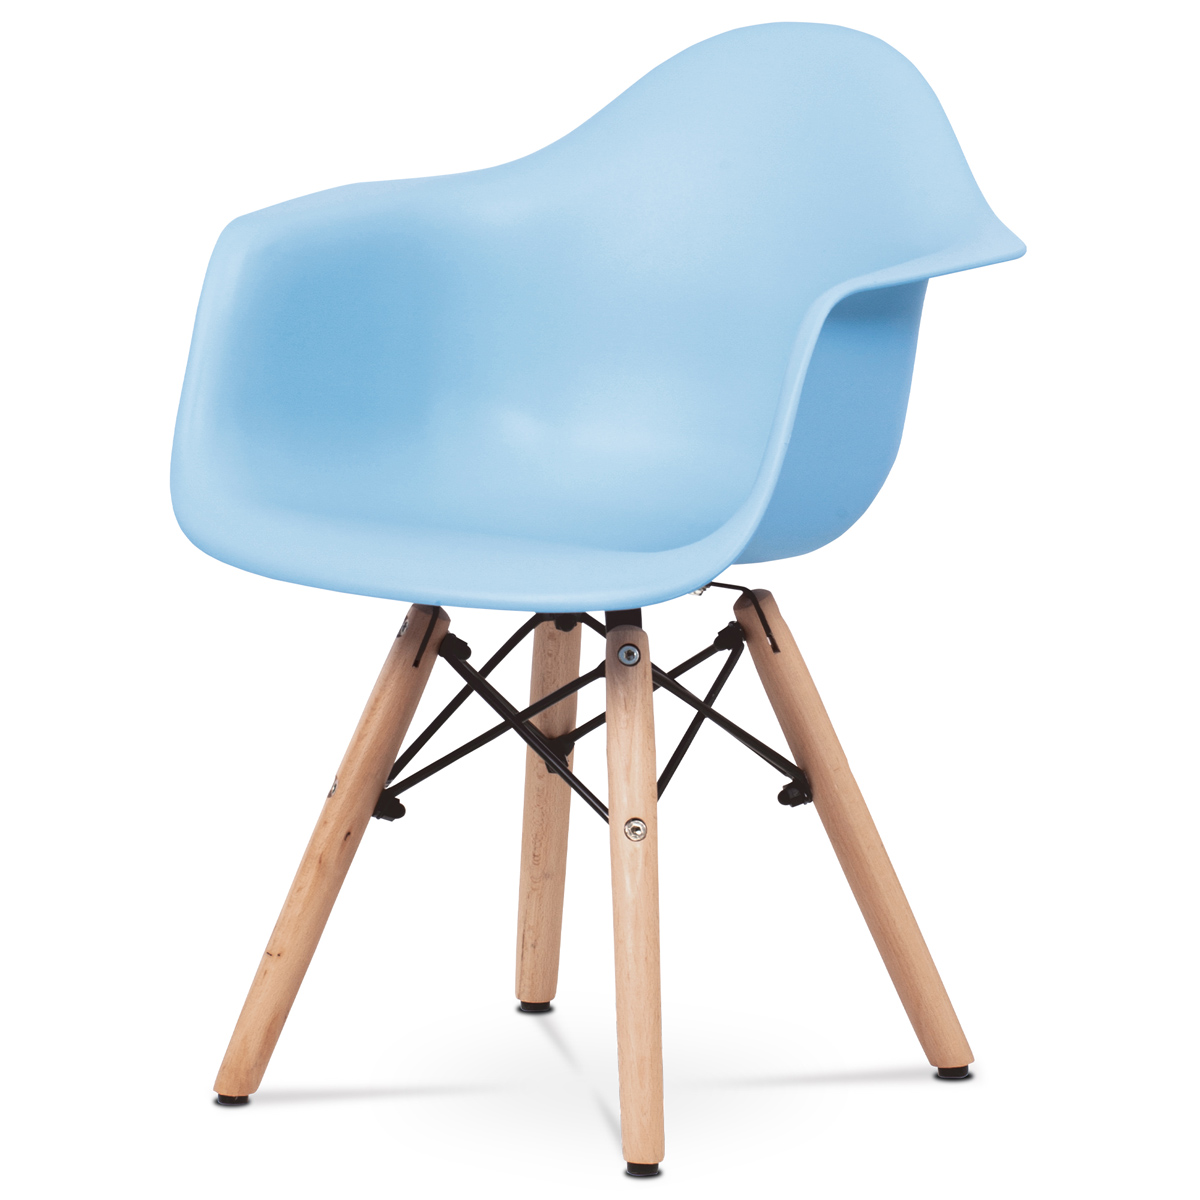 Detská stolička, svetlo modrá plastová škrupina, nohy masív buk,  prírodný odtieň